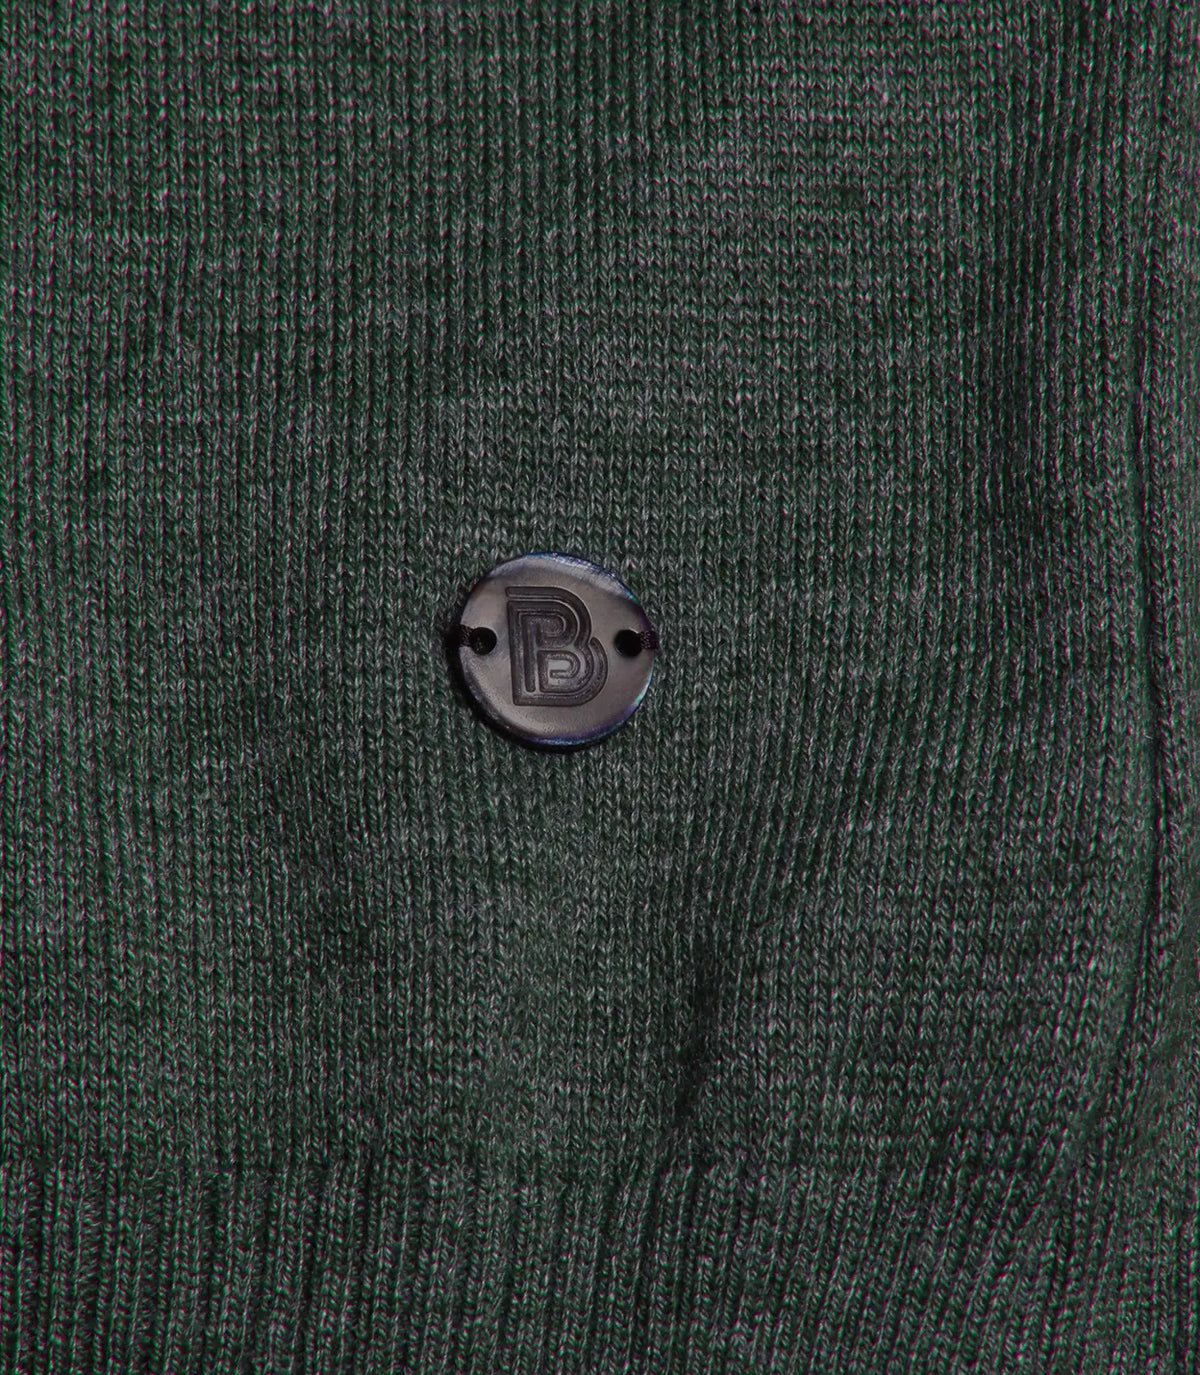 Rivage Knit Polo Medium Green - Barthelemy